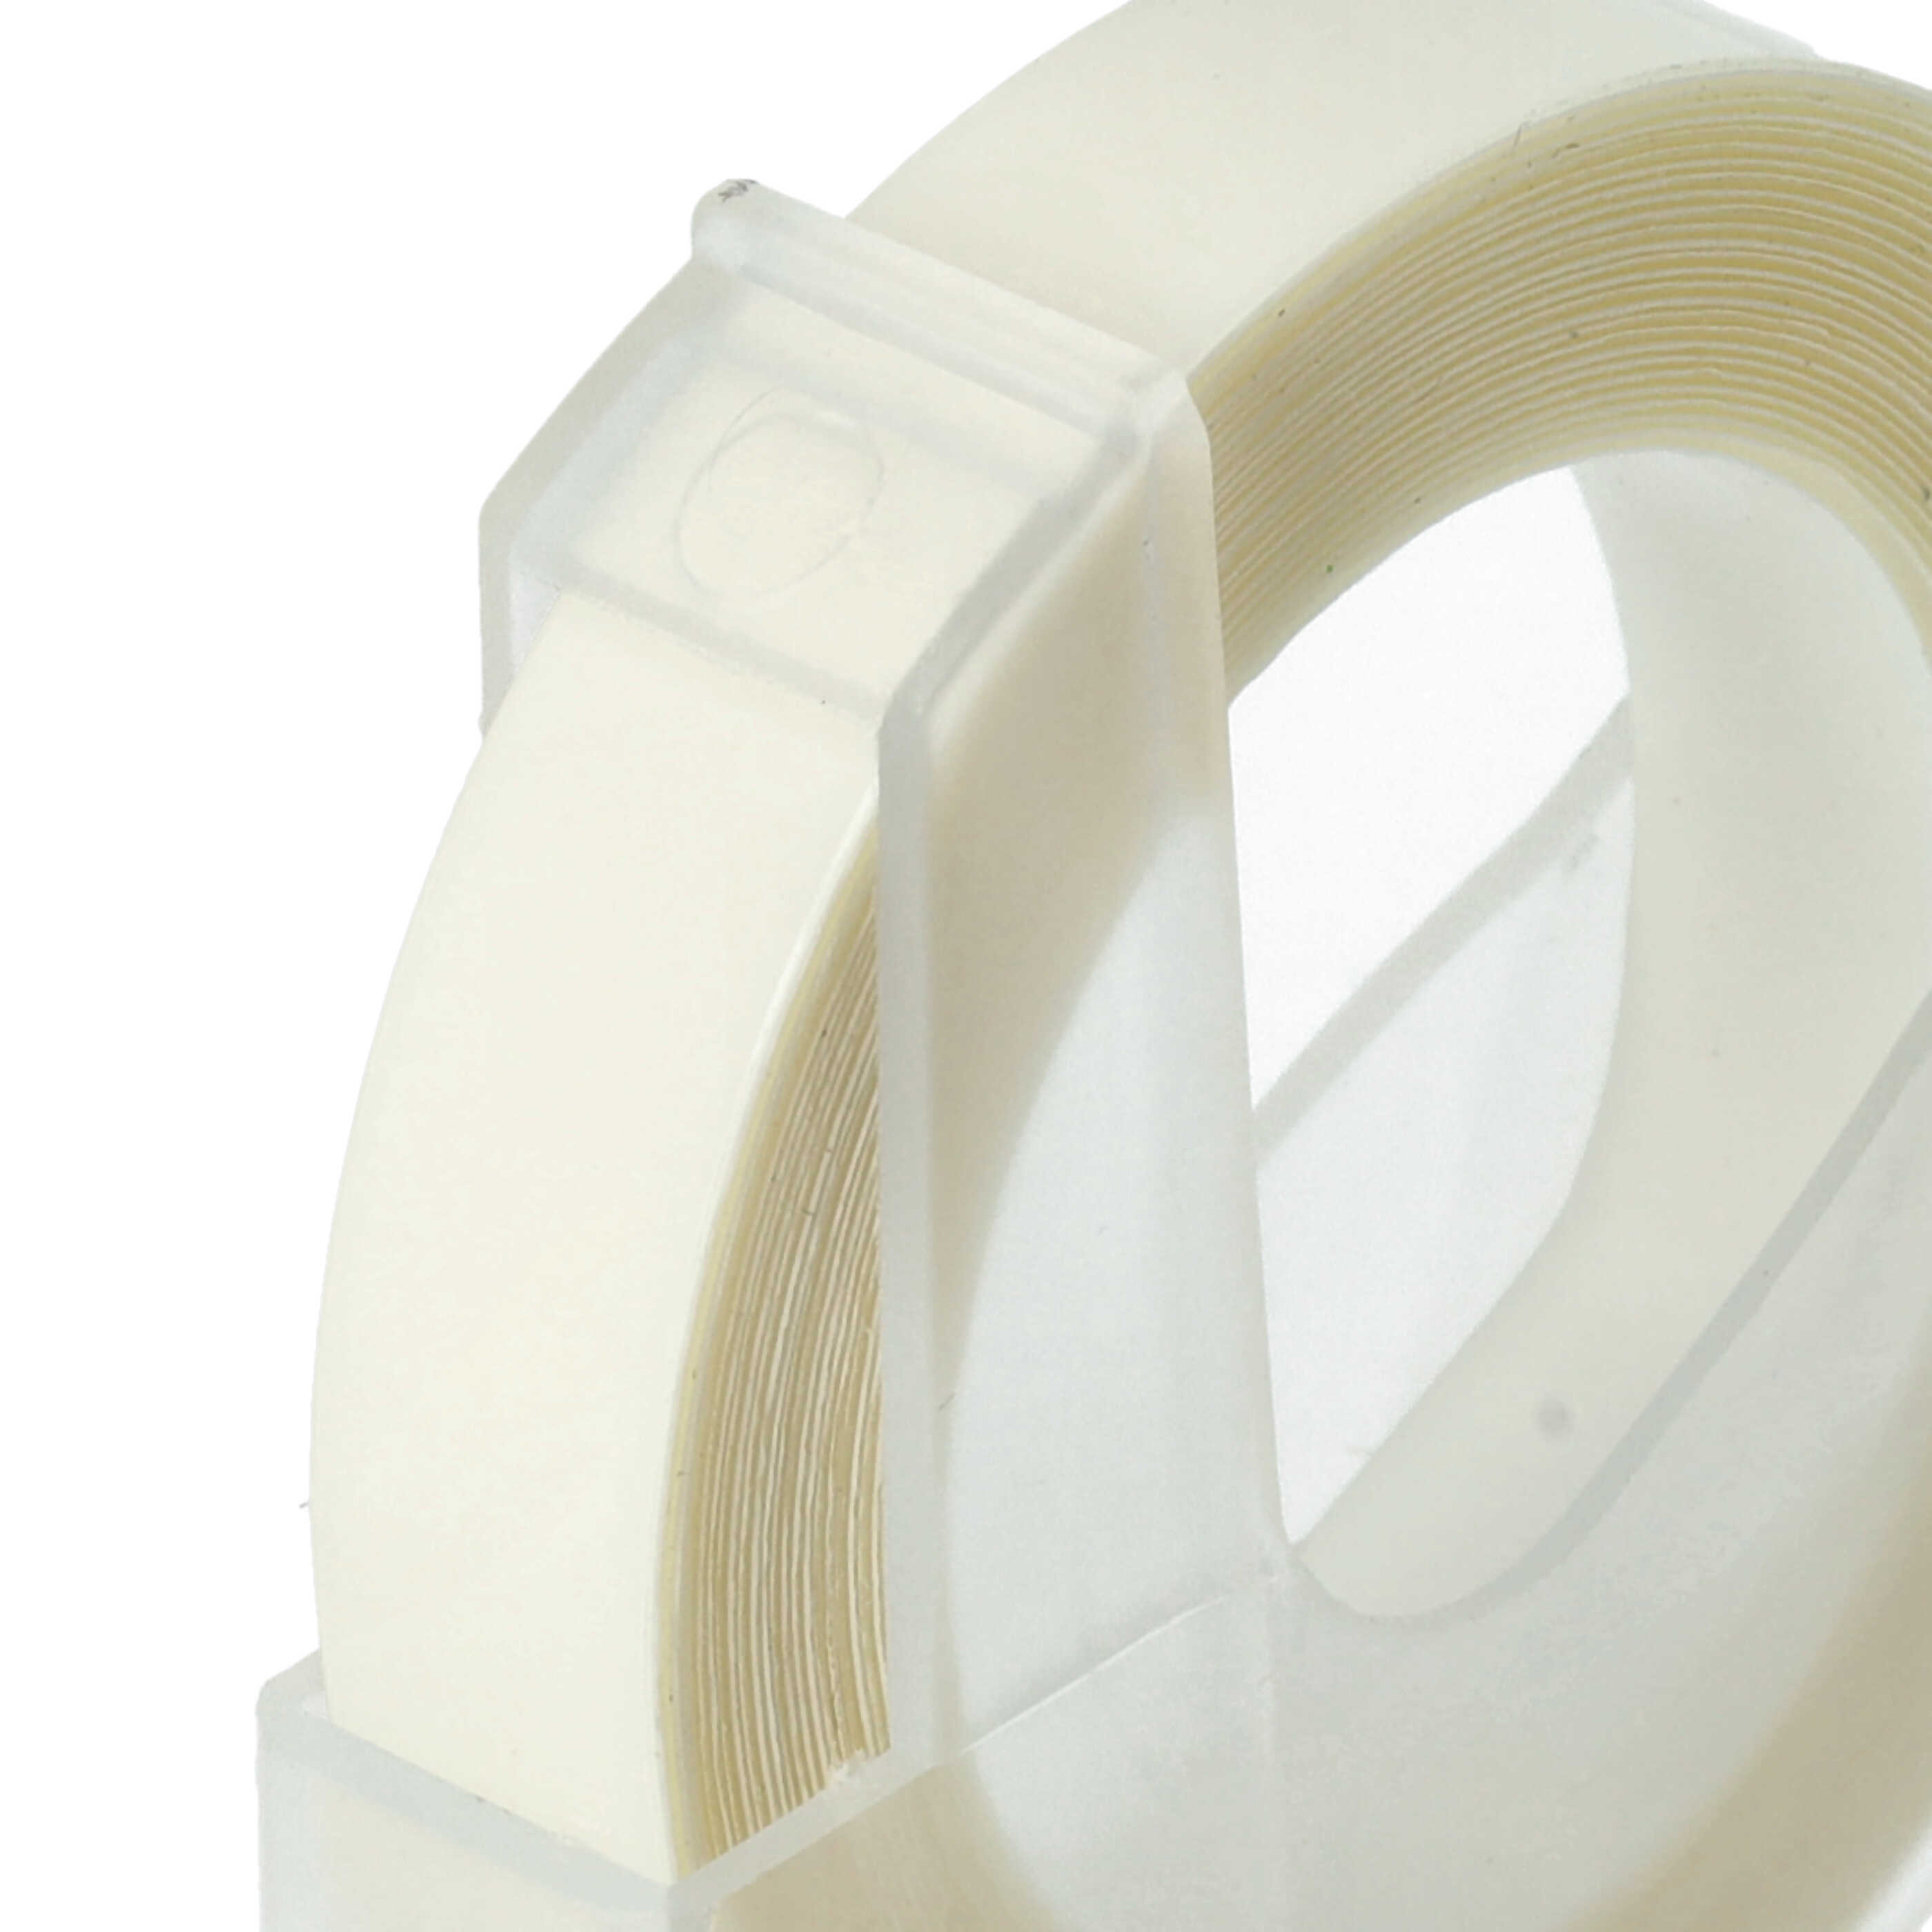 Casete cinta relieve 3D Casete cinta escritura reemplaza Dymo 0898100, 520101 Blanco su Transparente